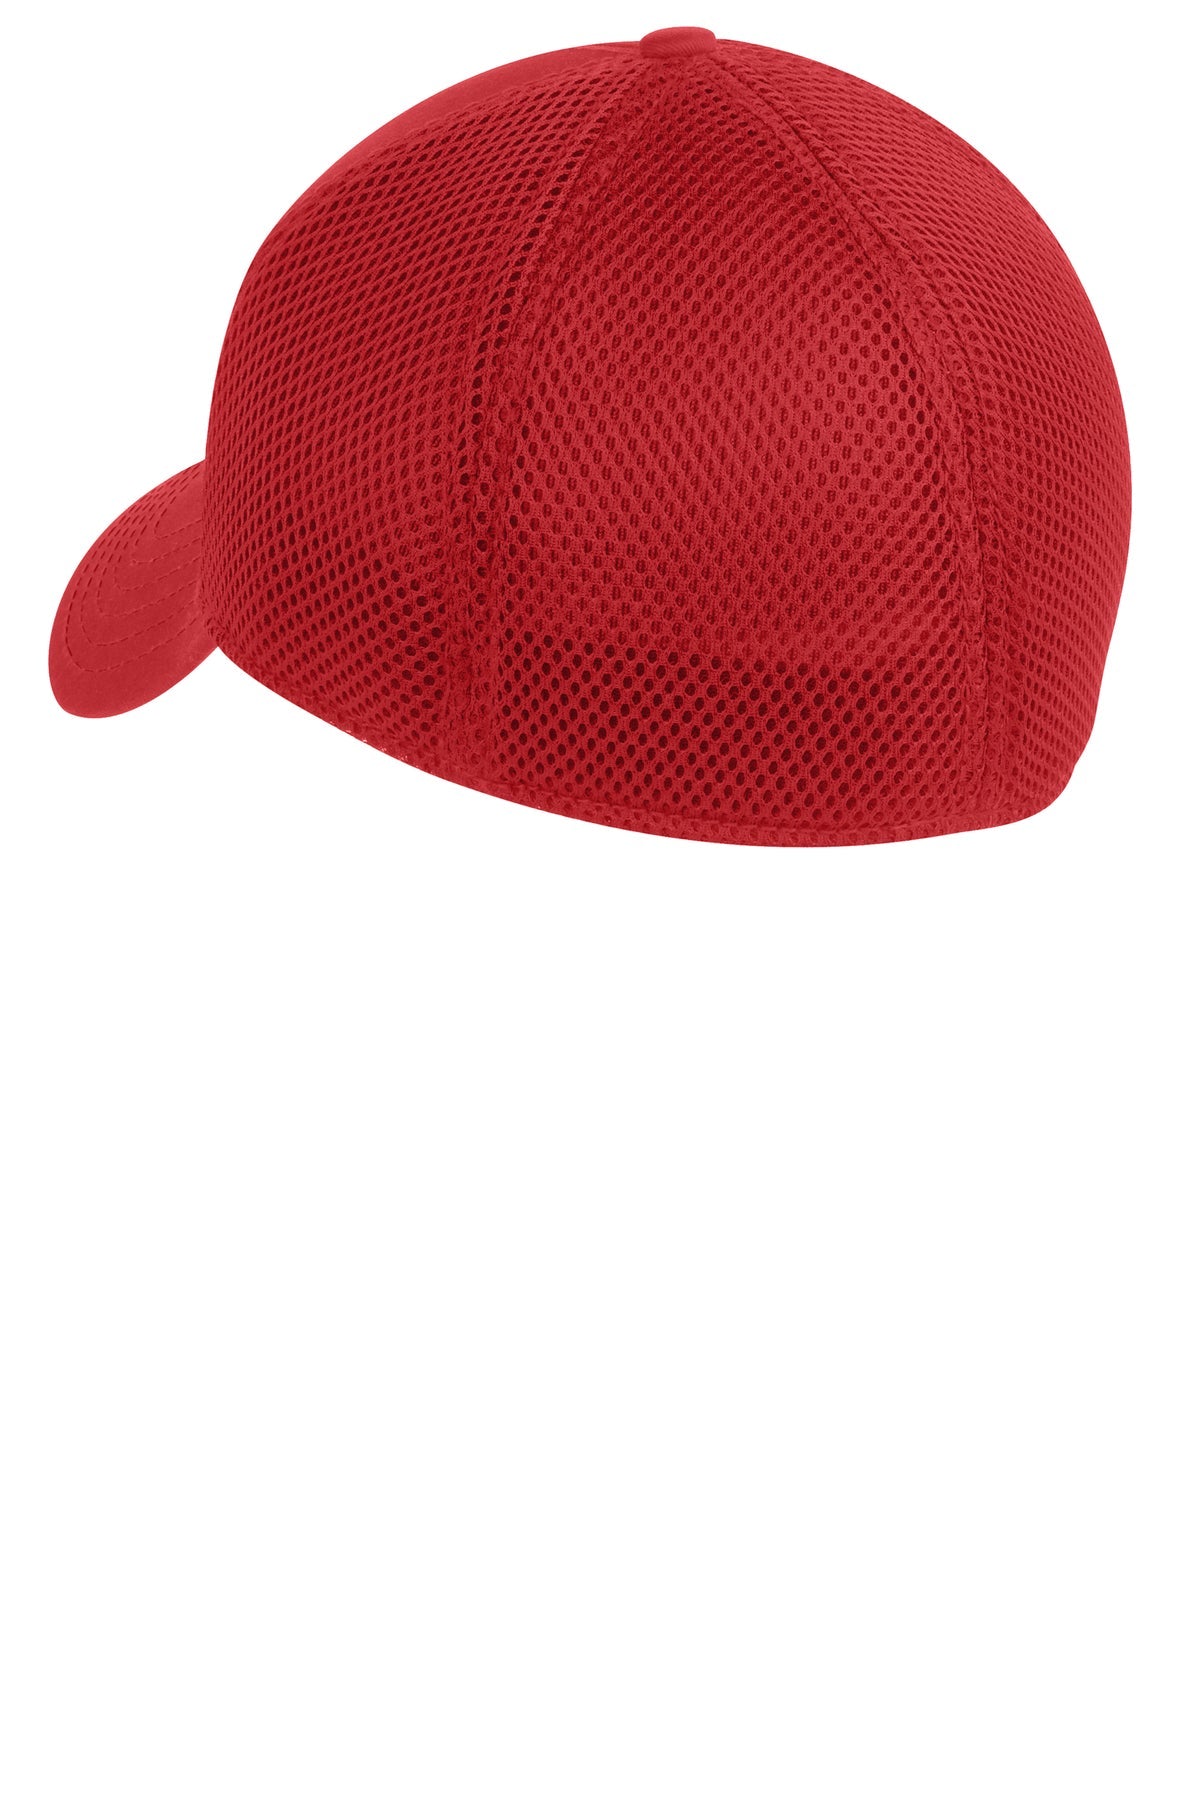 New Era Stretch Mesh Custom Caps, Scarlet Red